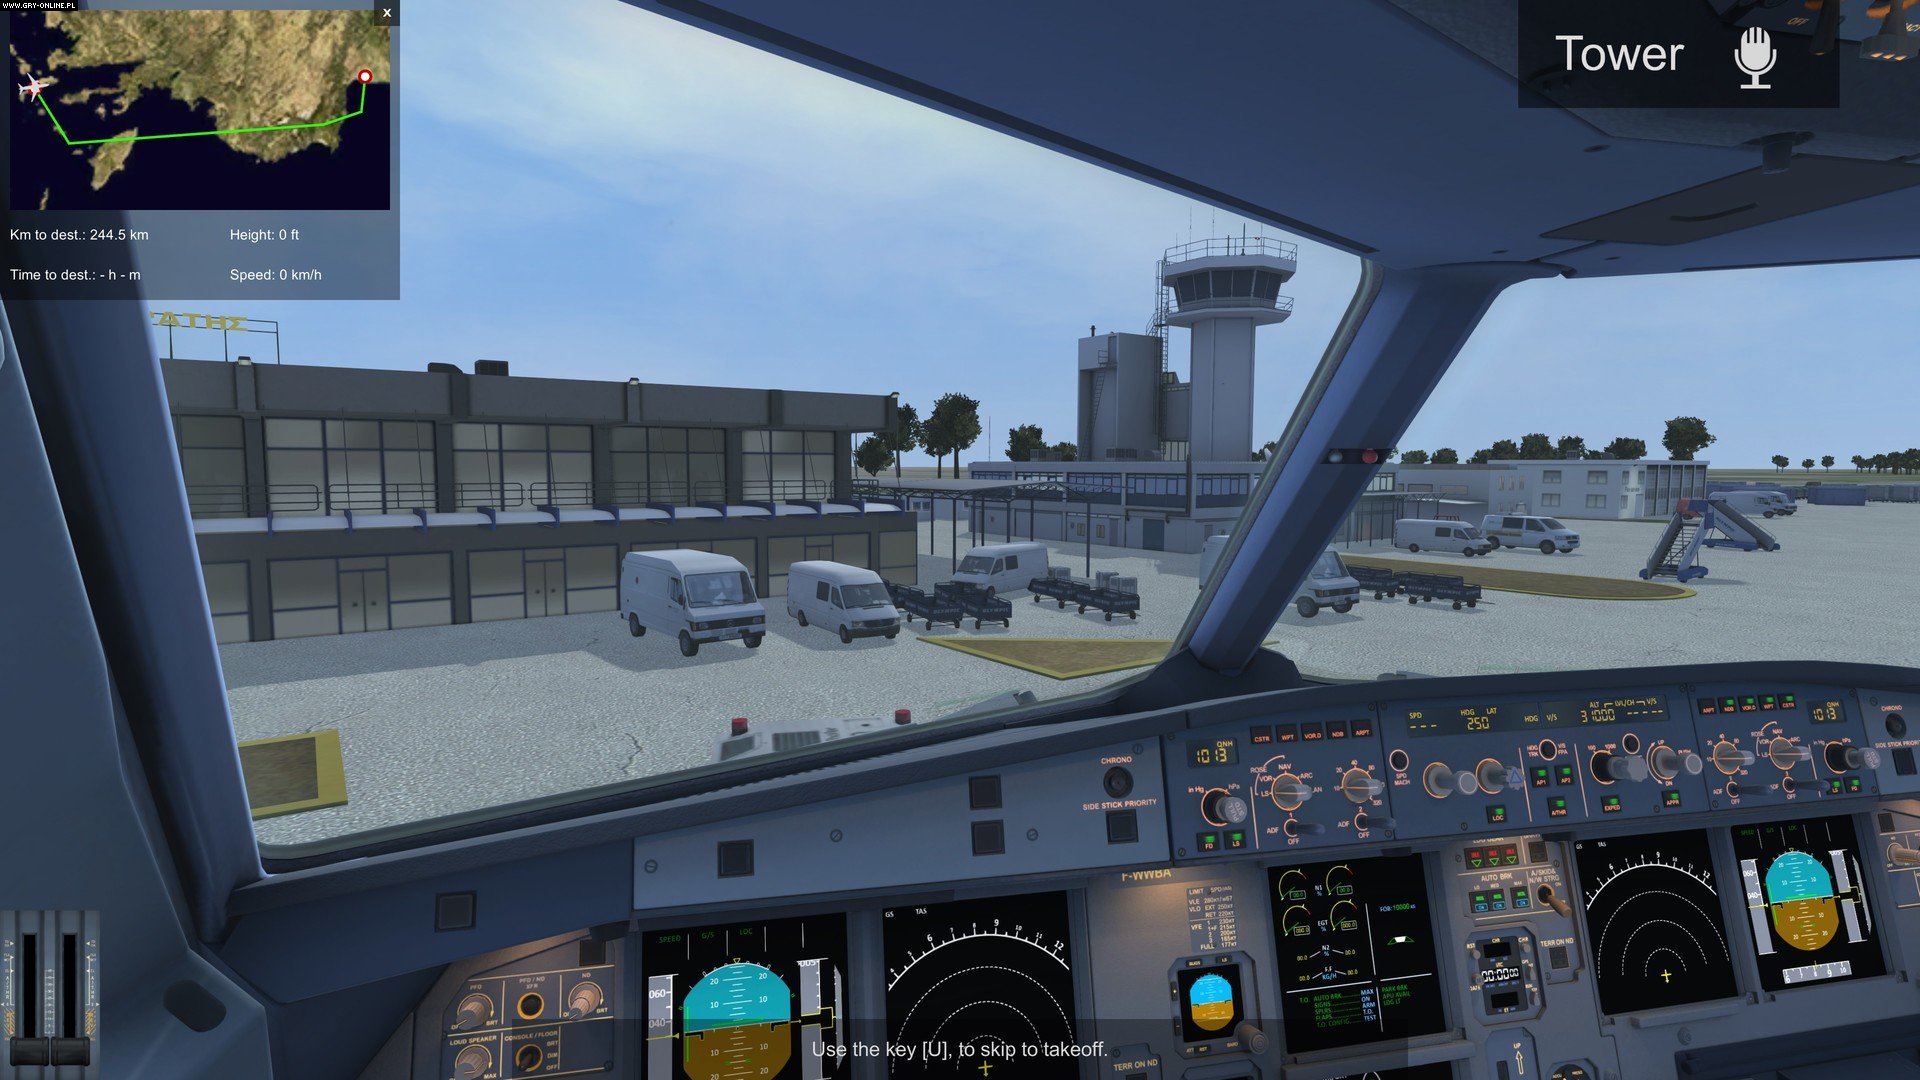 A320 Simulator